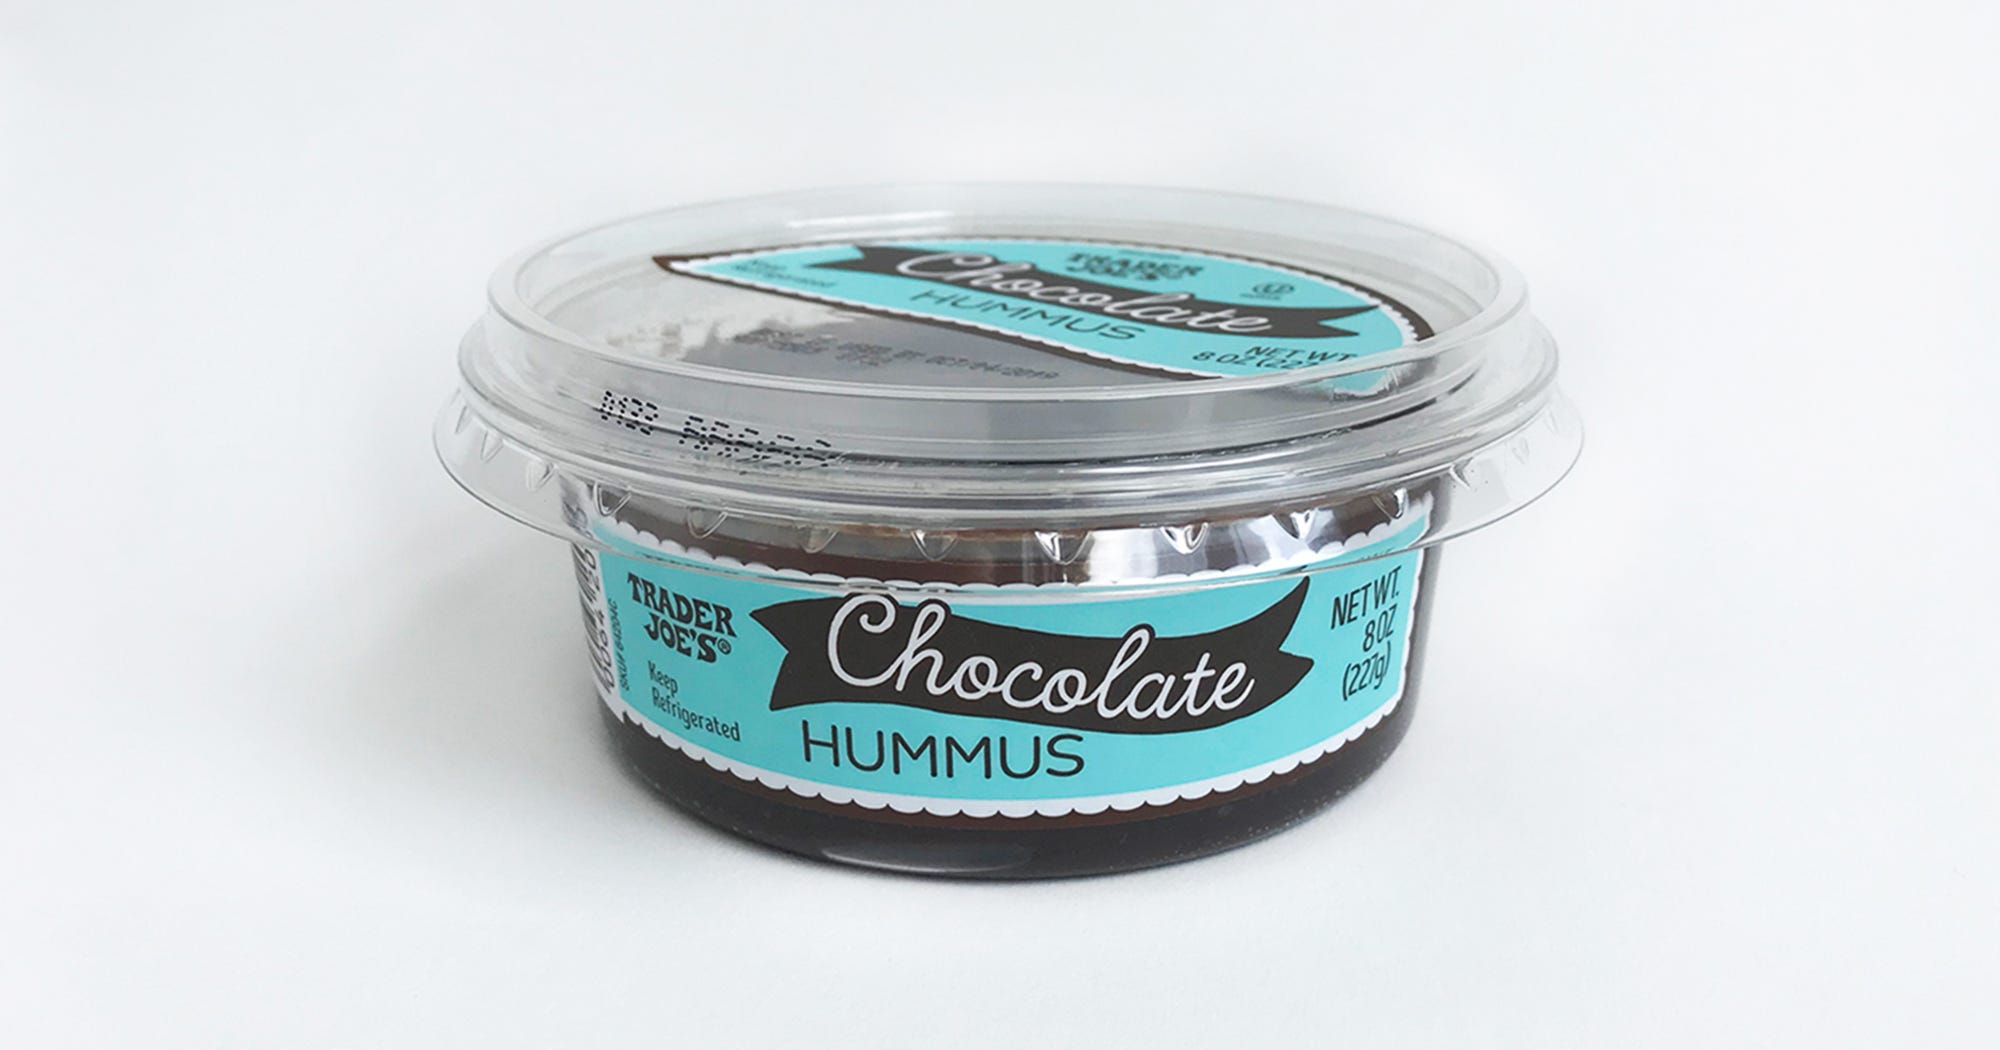 cioccolato-hummus-trader-joes